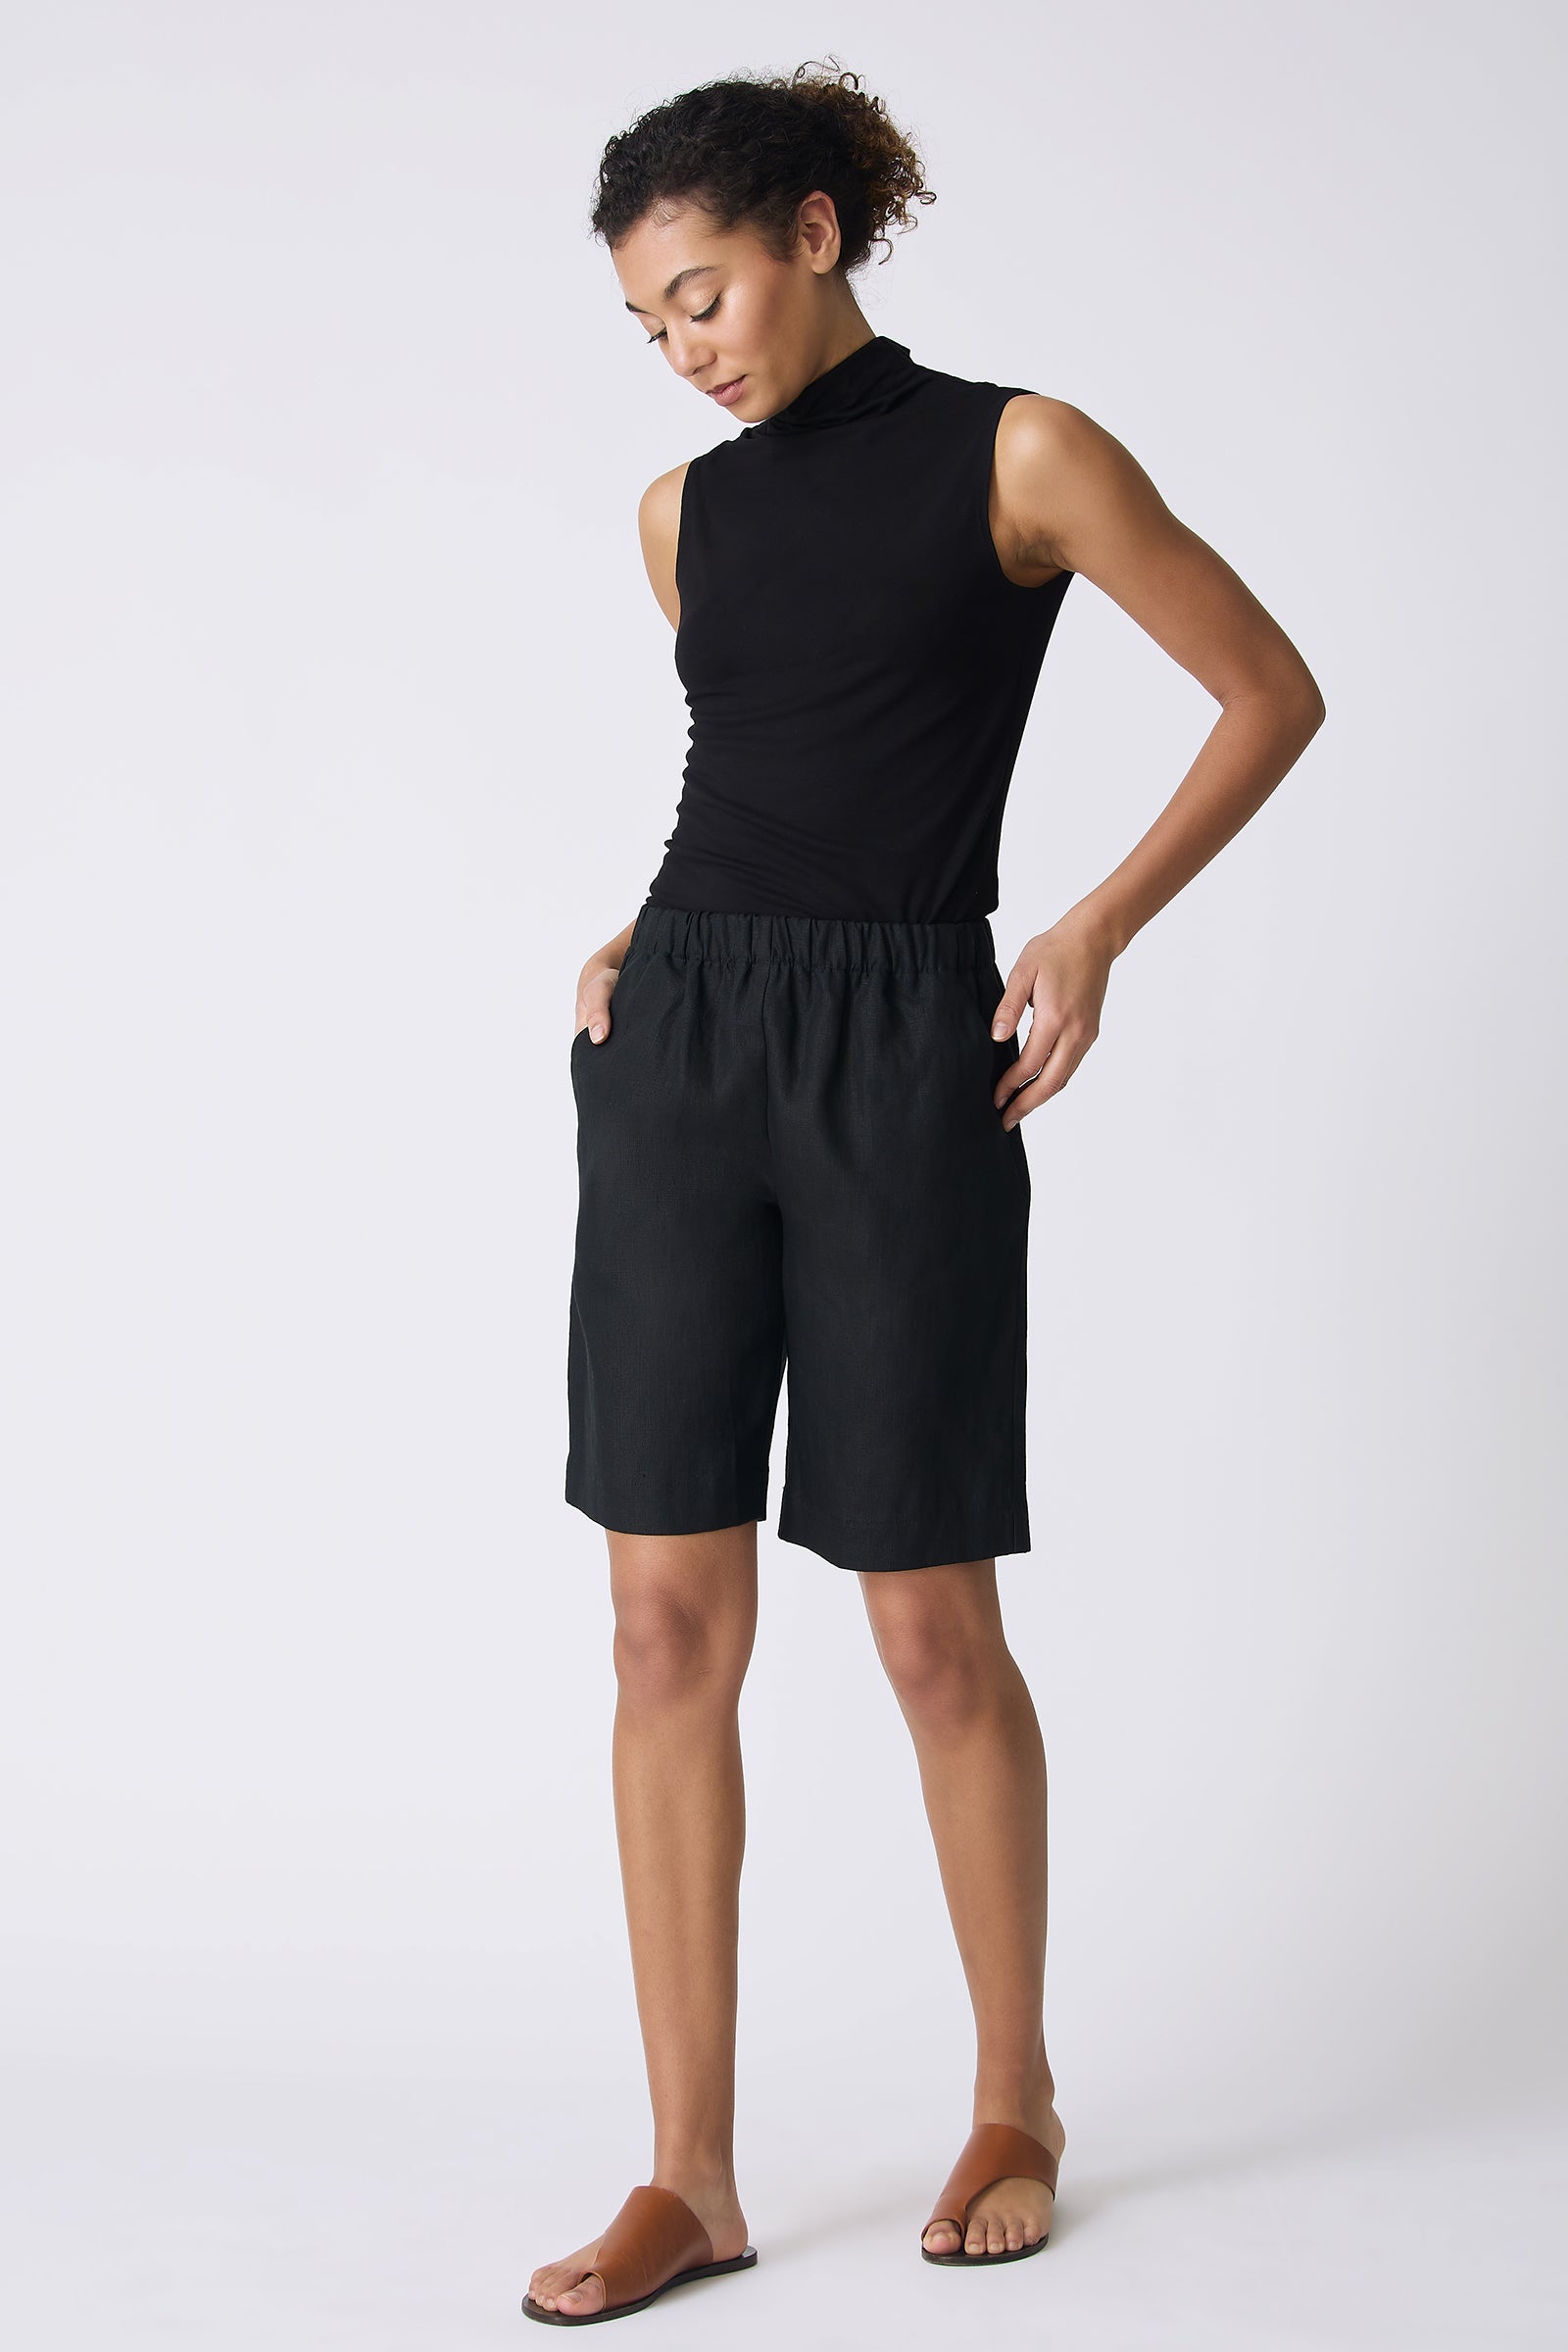 Kal Rieman Bahama Short in Black Linen on model looking down full front view